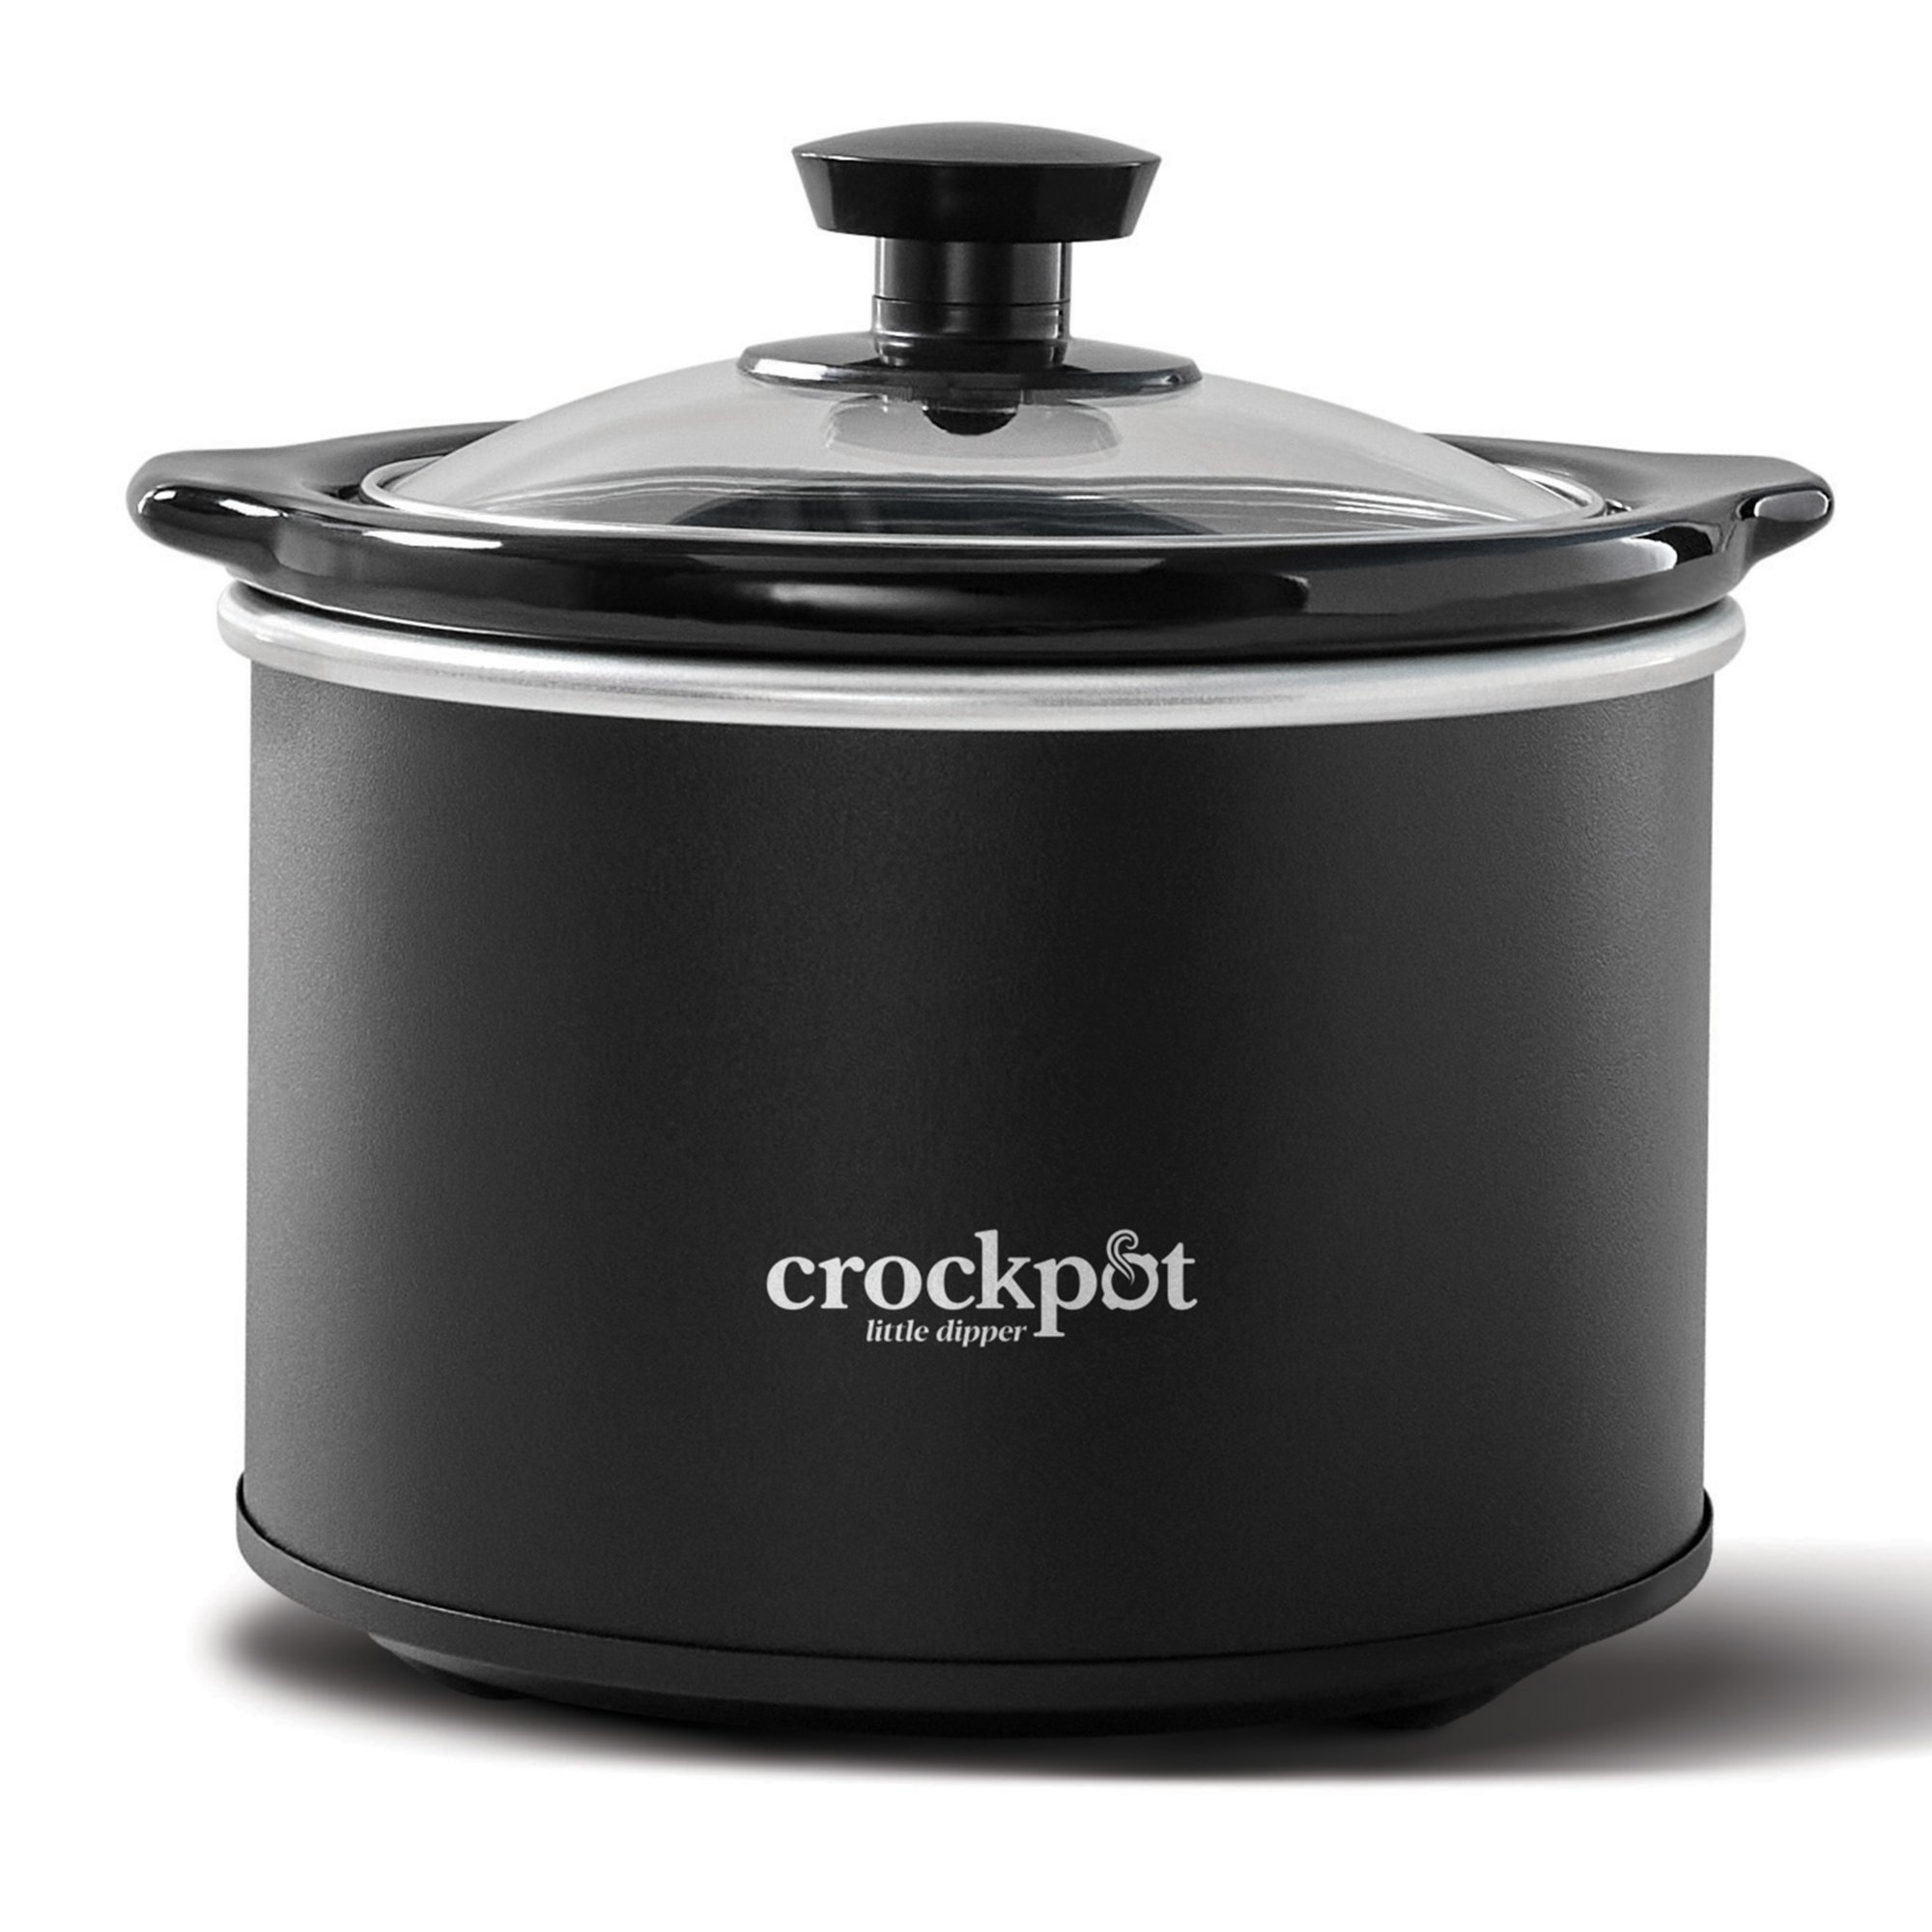 Crockpot 1-1/2-Quart Round Manual Slow Cooker, Black Brand New